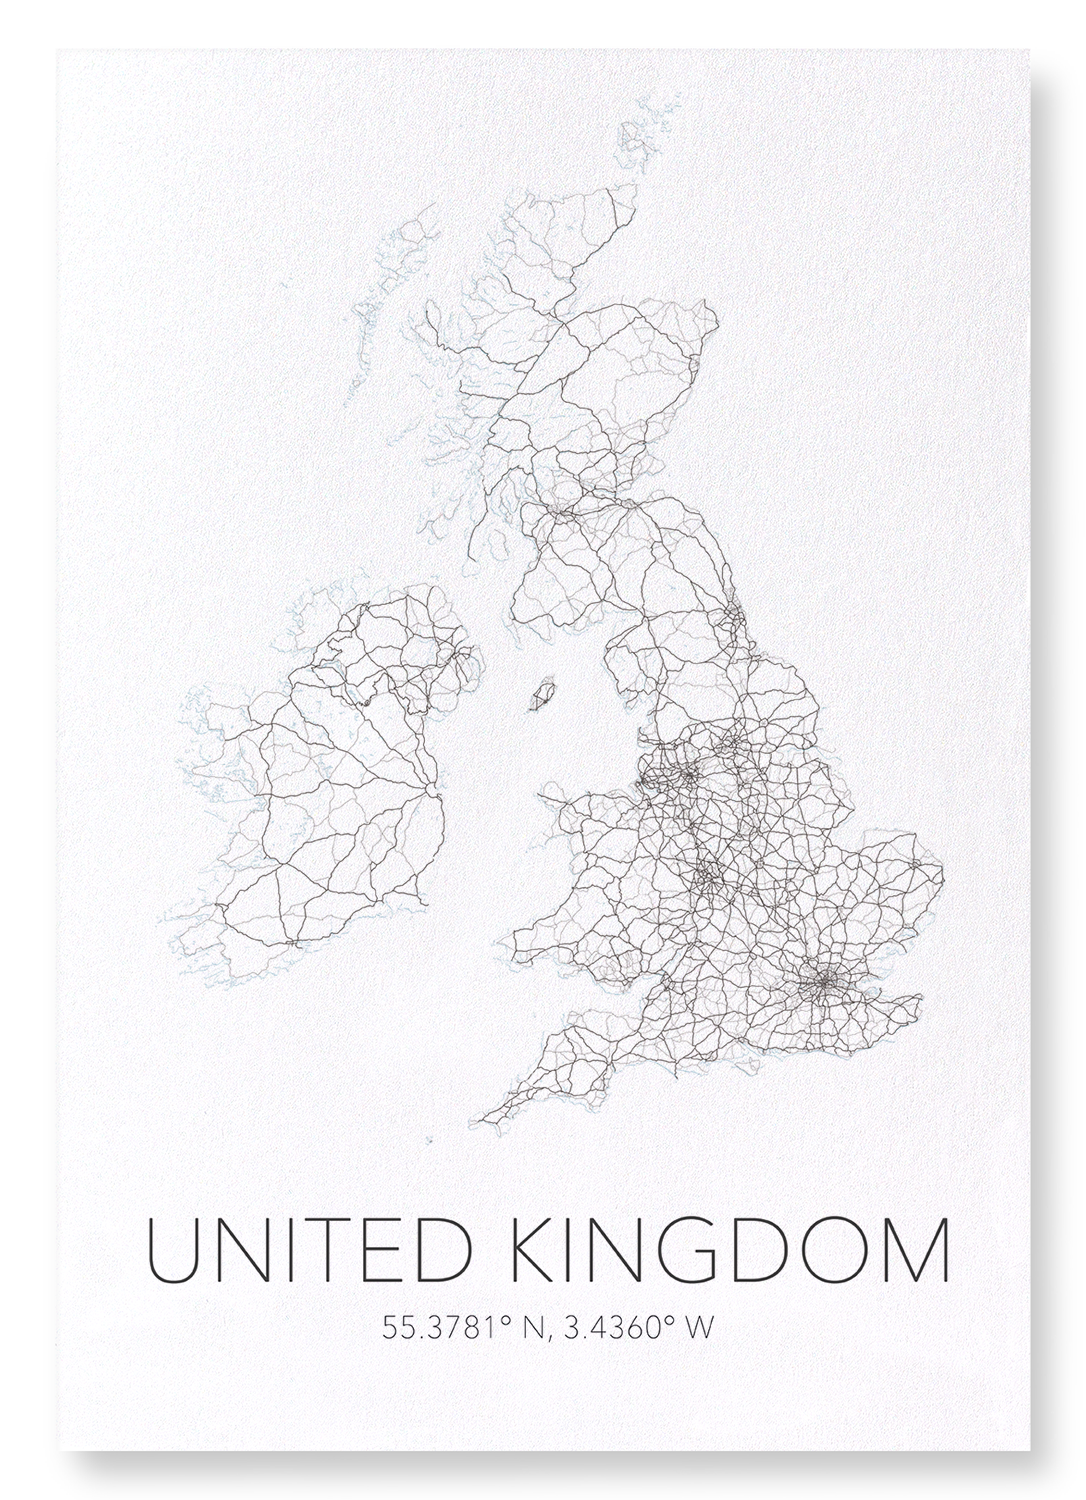 UNITED KINGDOM CUTOUT: Map Cutout Art Print